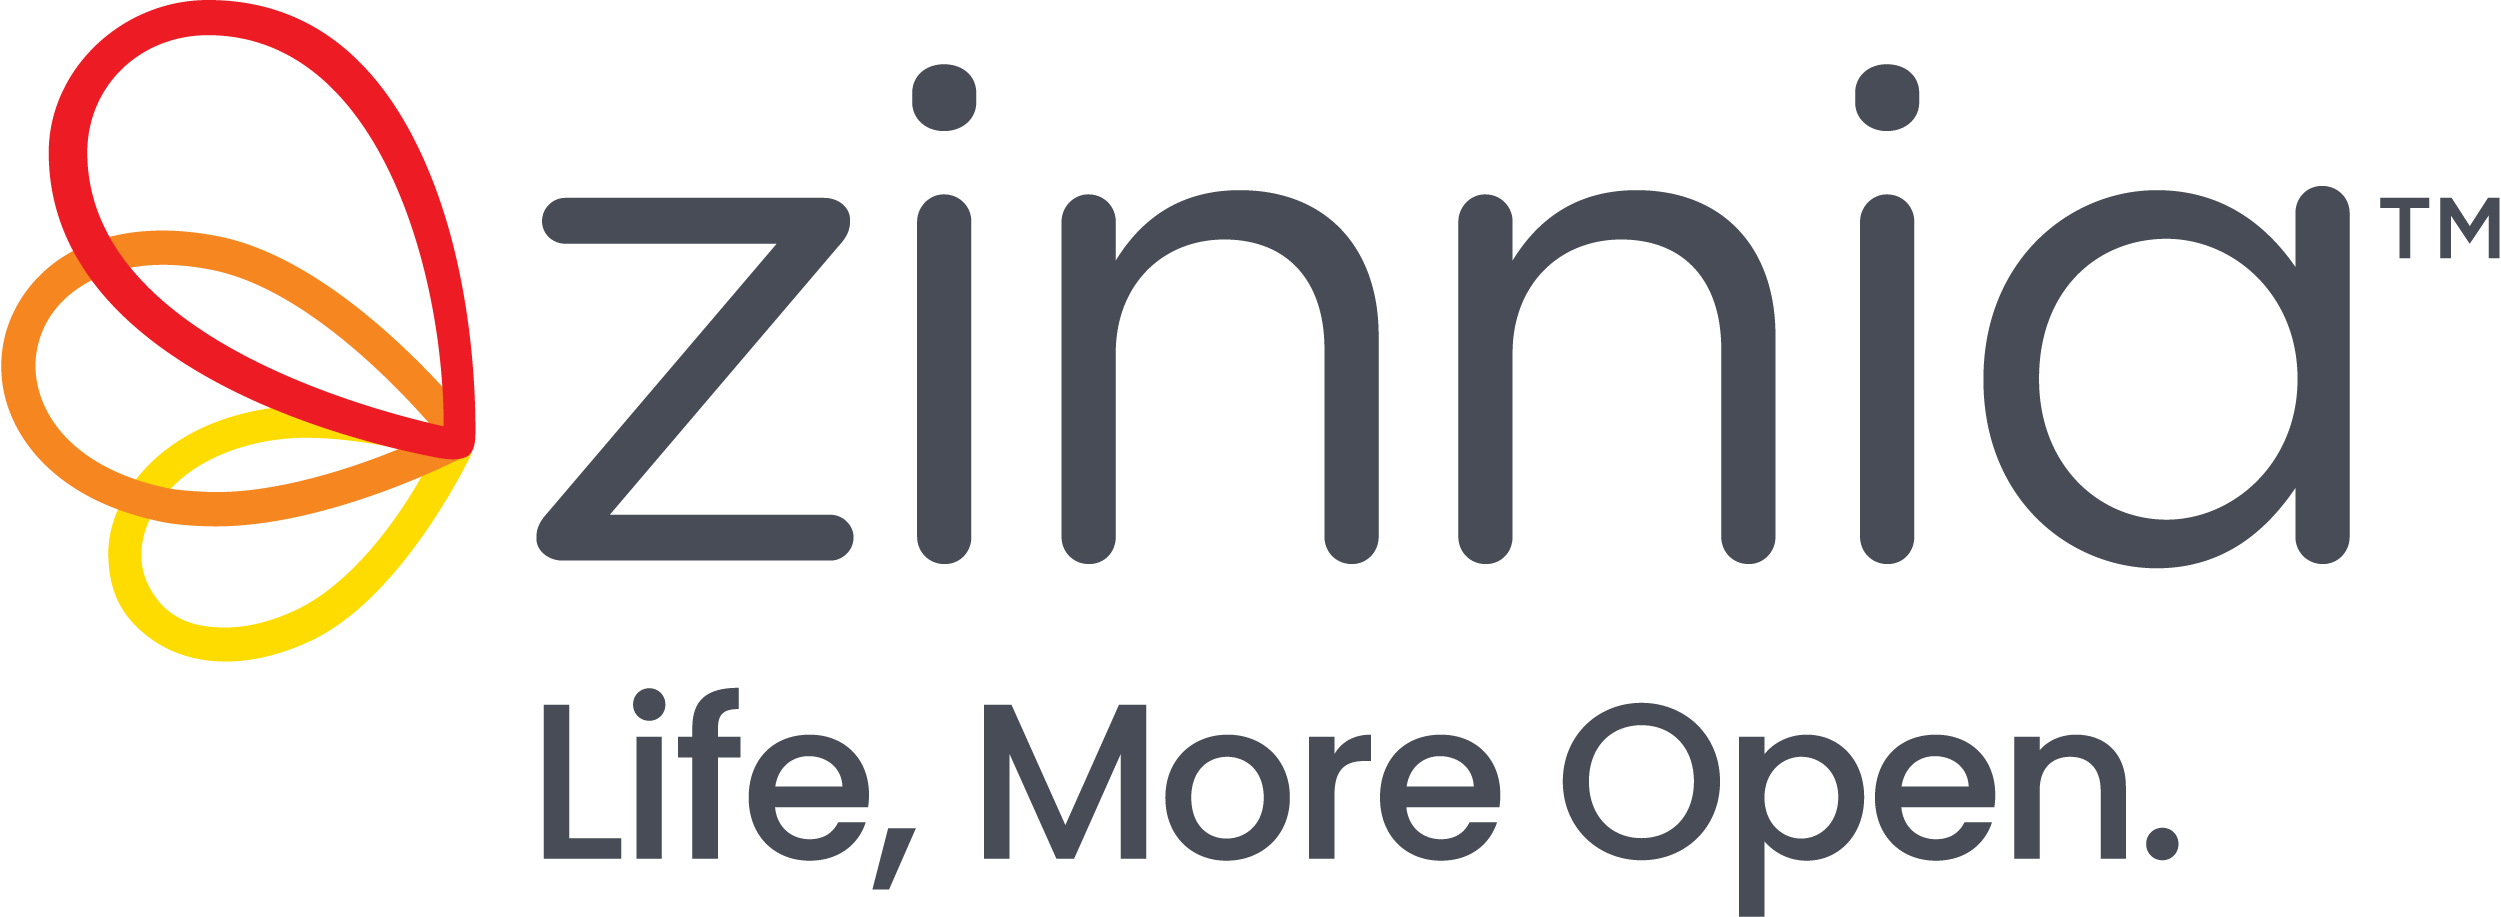 Zinnia logo